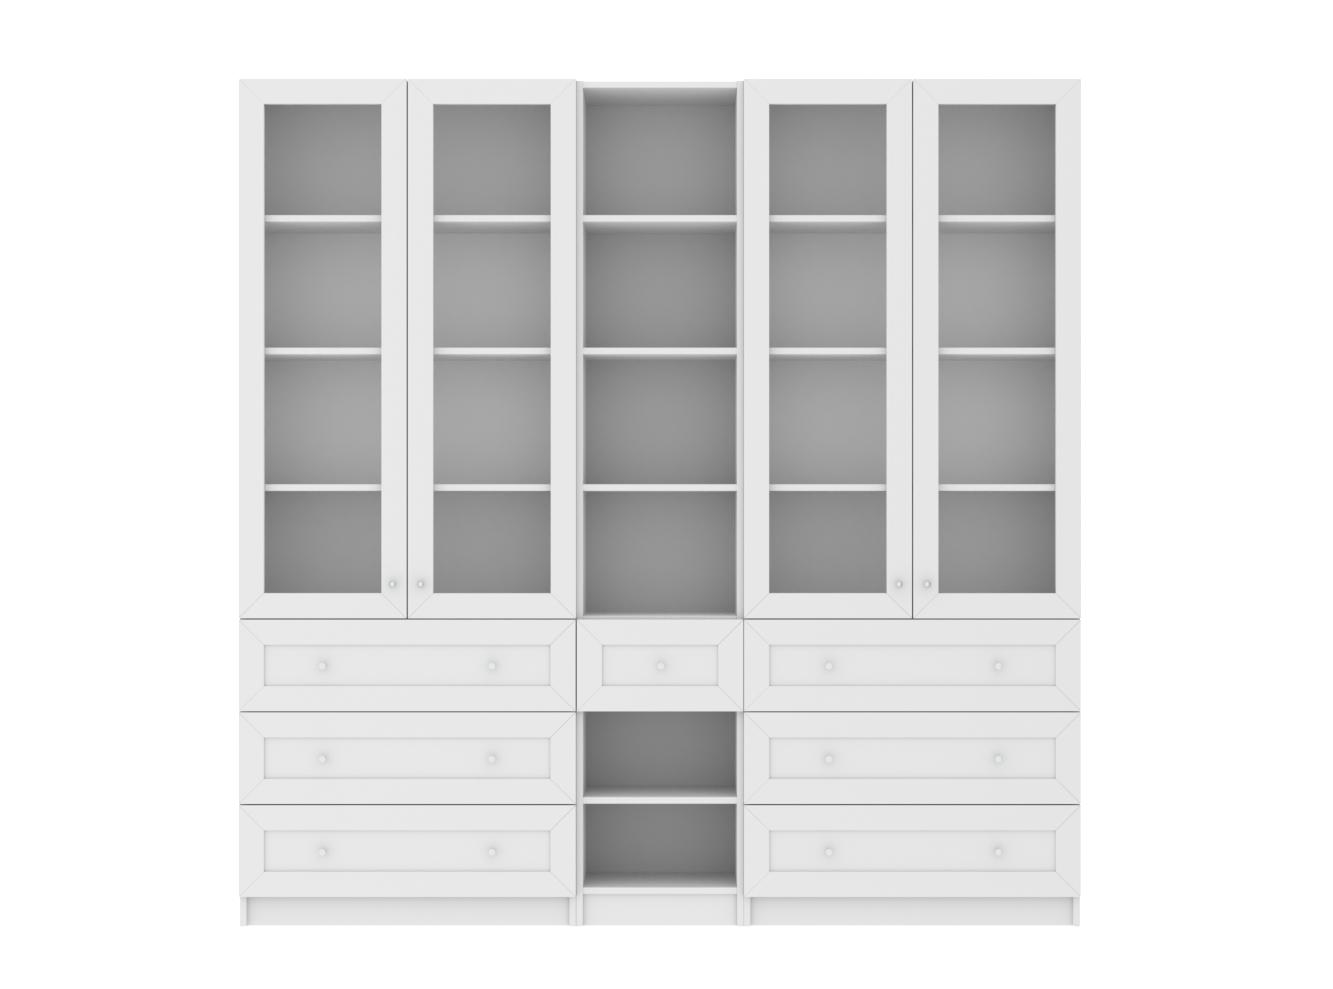 Книжный шкаф Билли 367 white ИКЕА (IKEA) изображение товара